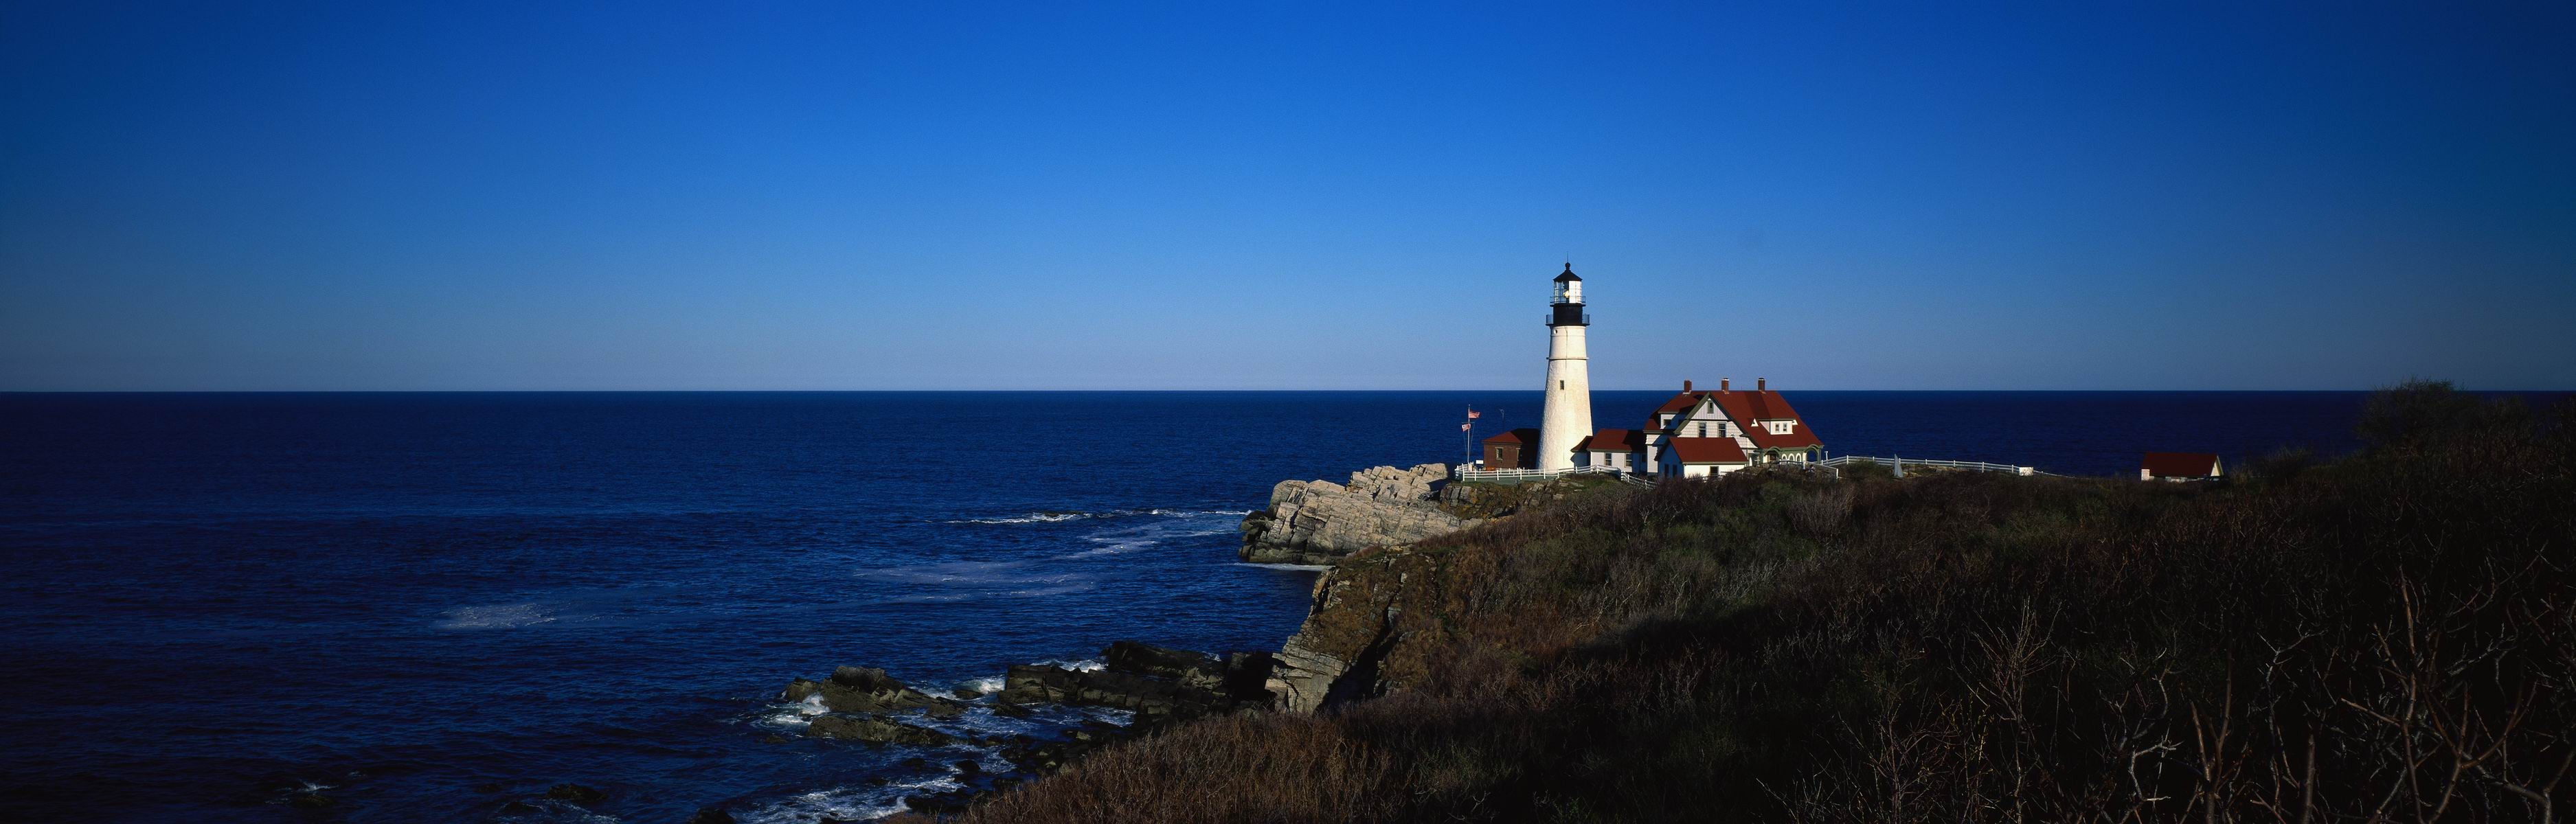 General 3750x1200 landscape lighthouse sea coast horizon dual monitors sky outdoors